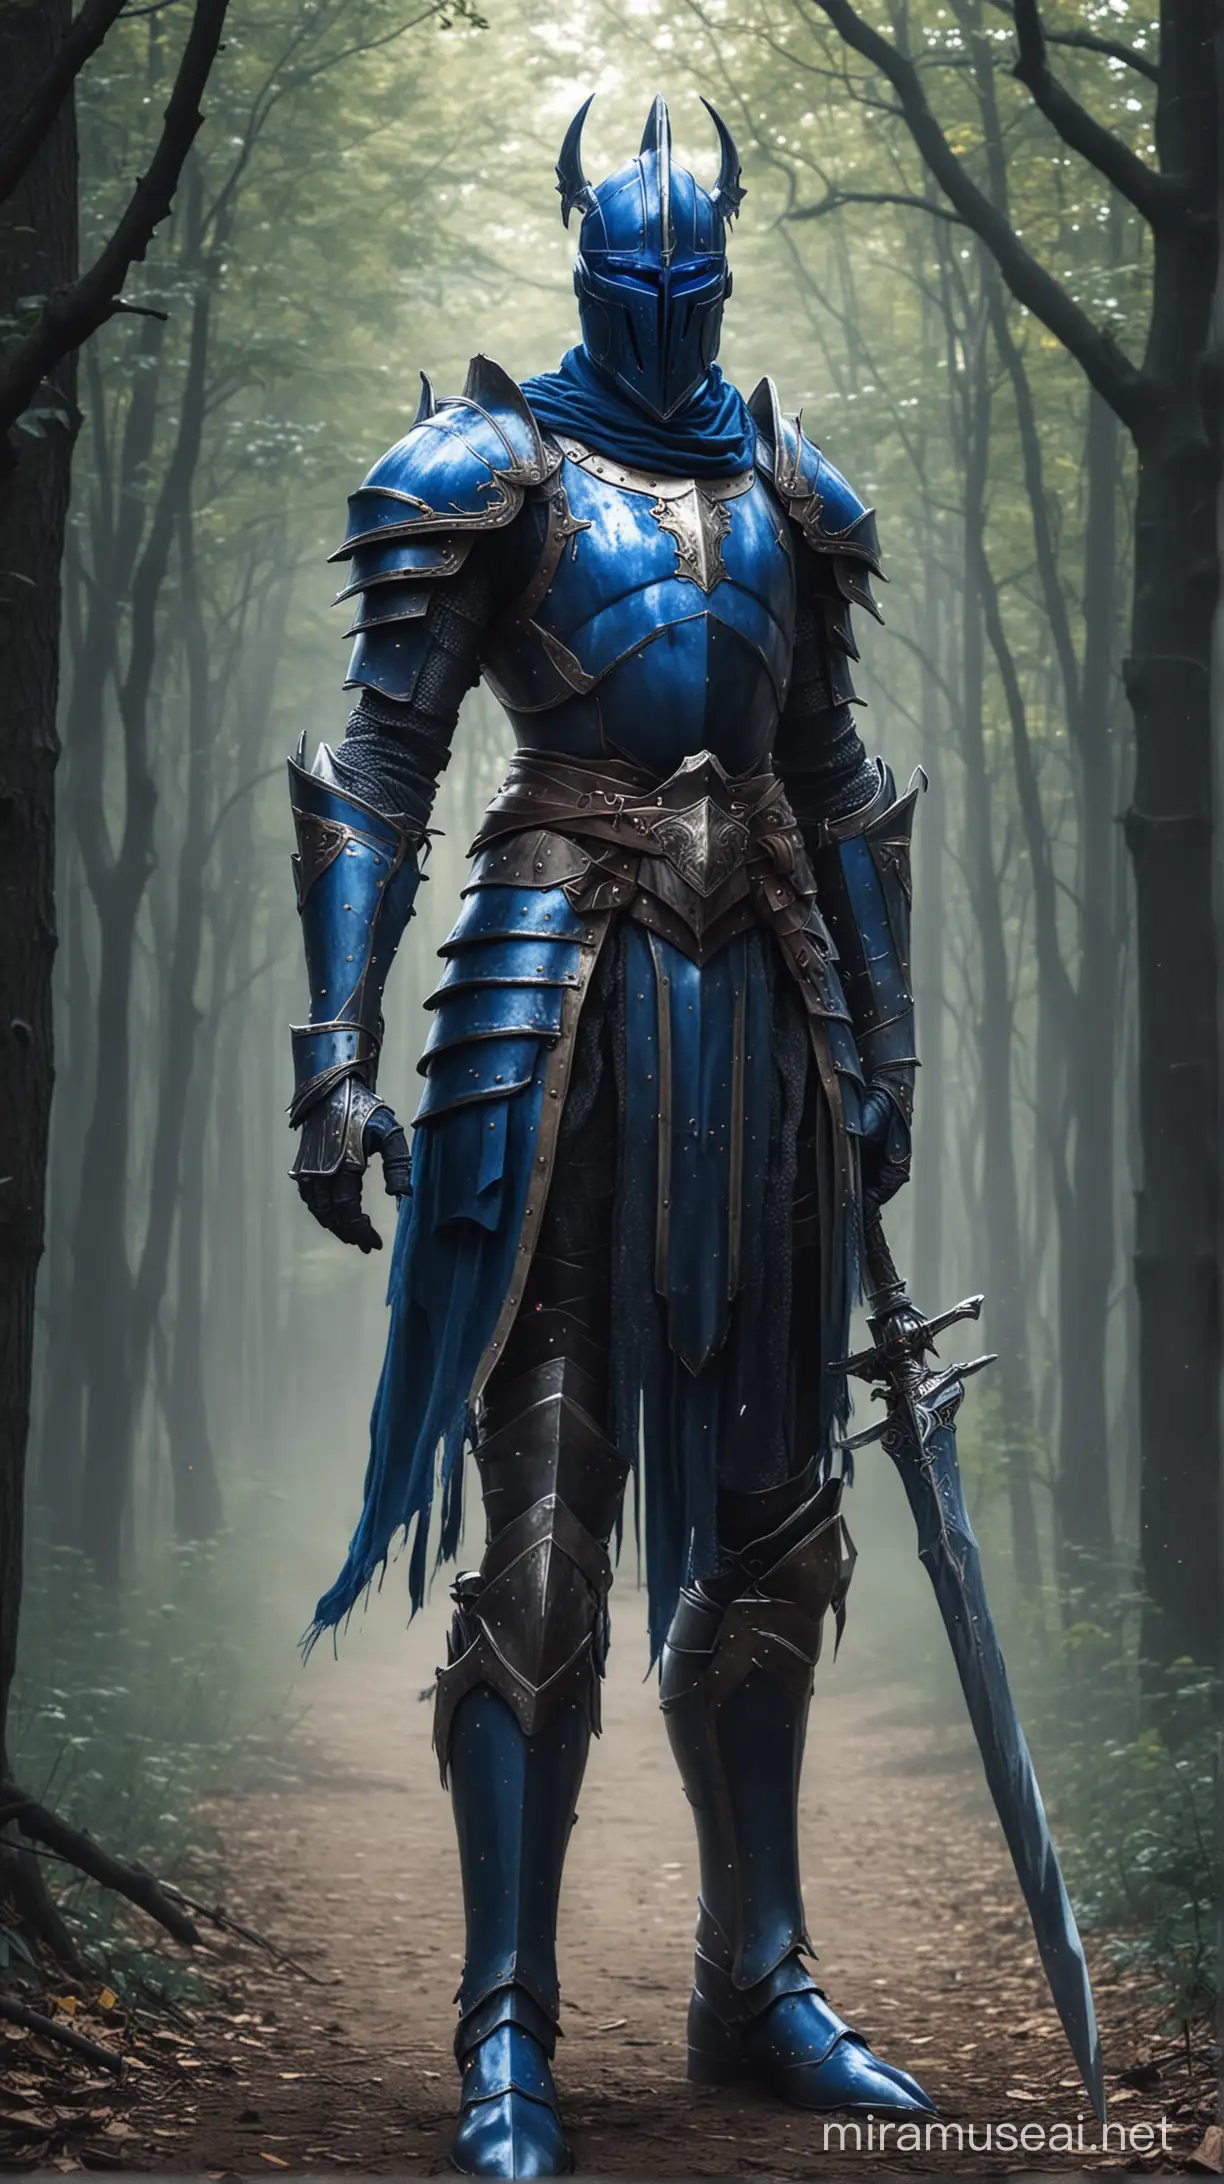 blue knight

